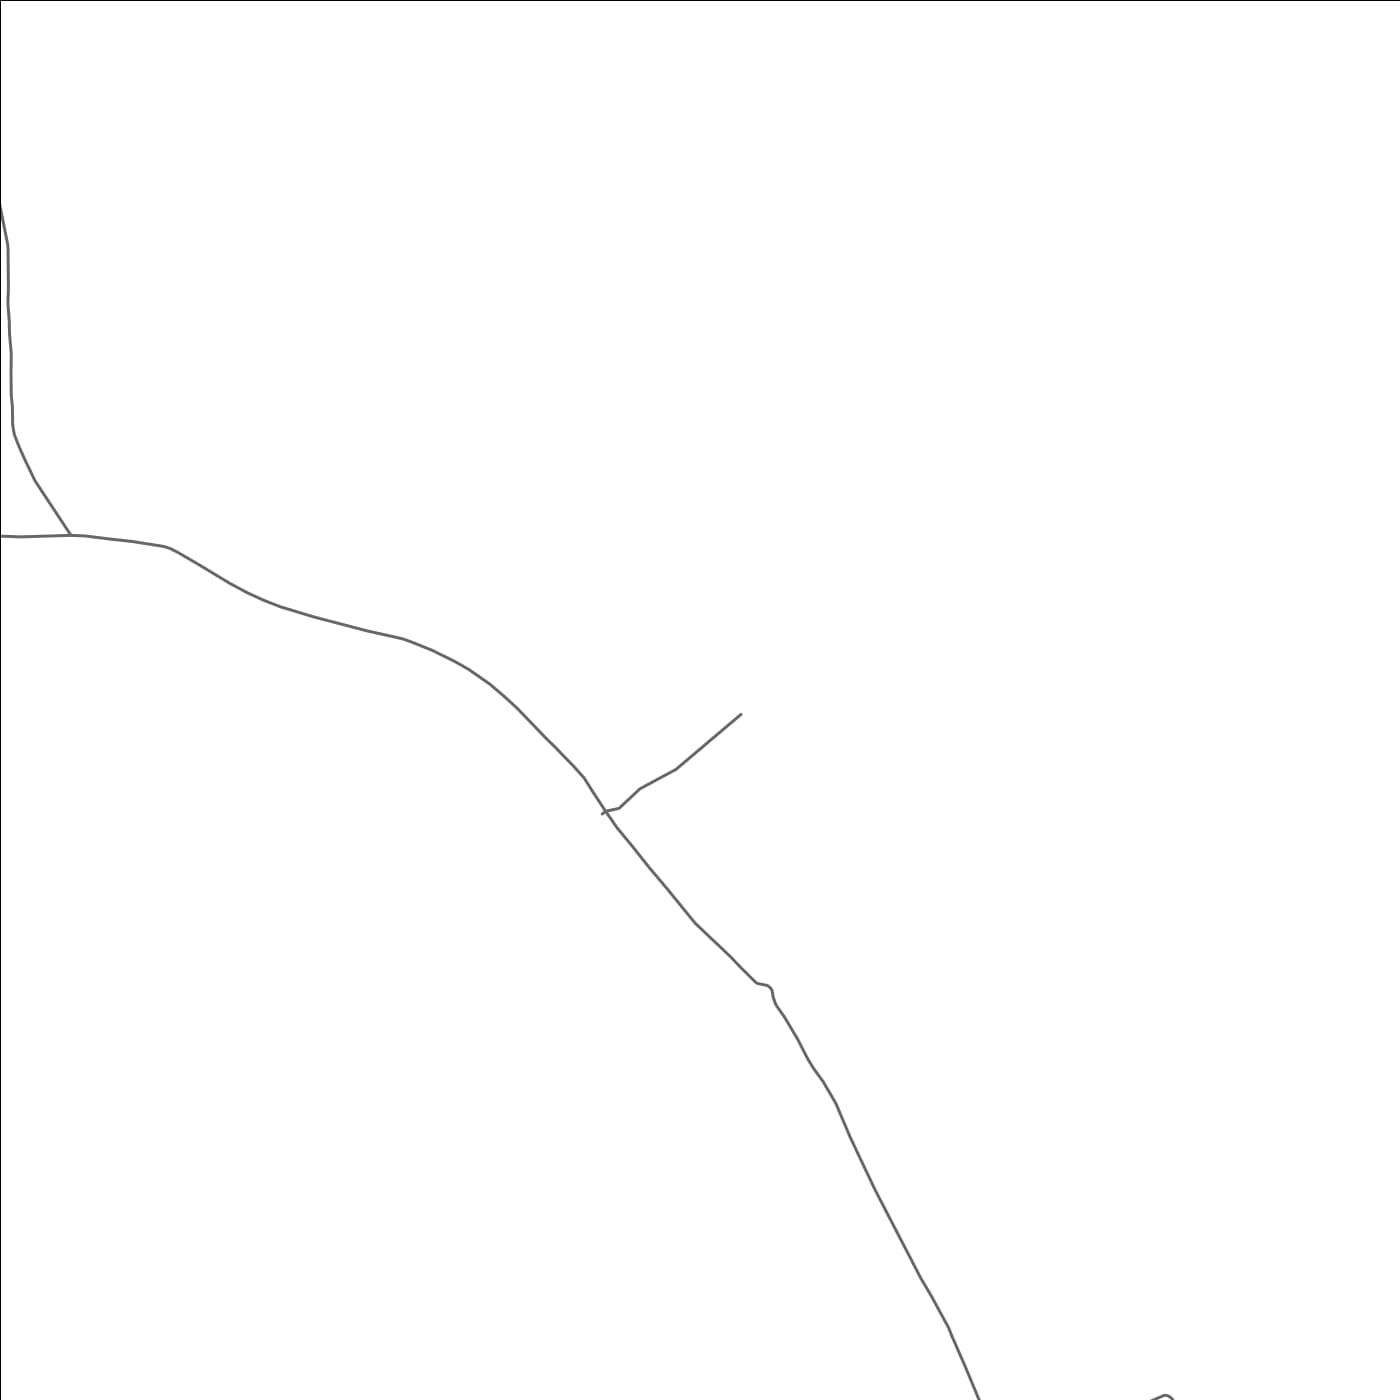 ROAD MAP OF TABIANG, KIRIBATI BY MAPBAKES